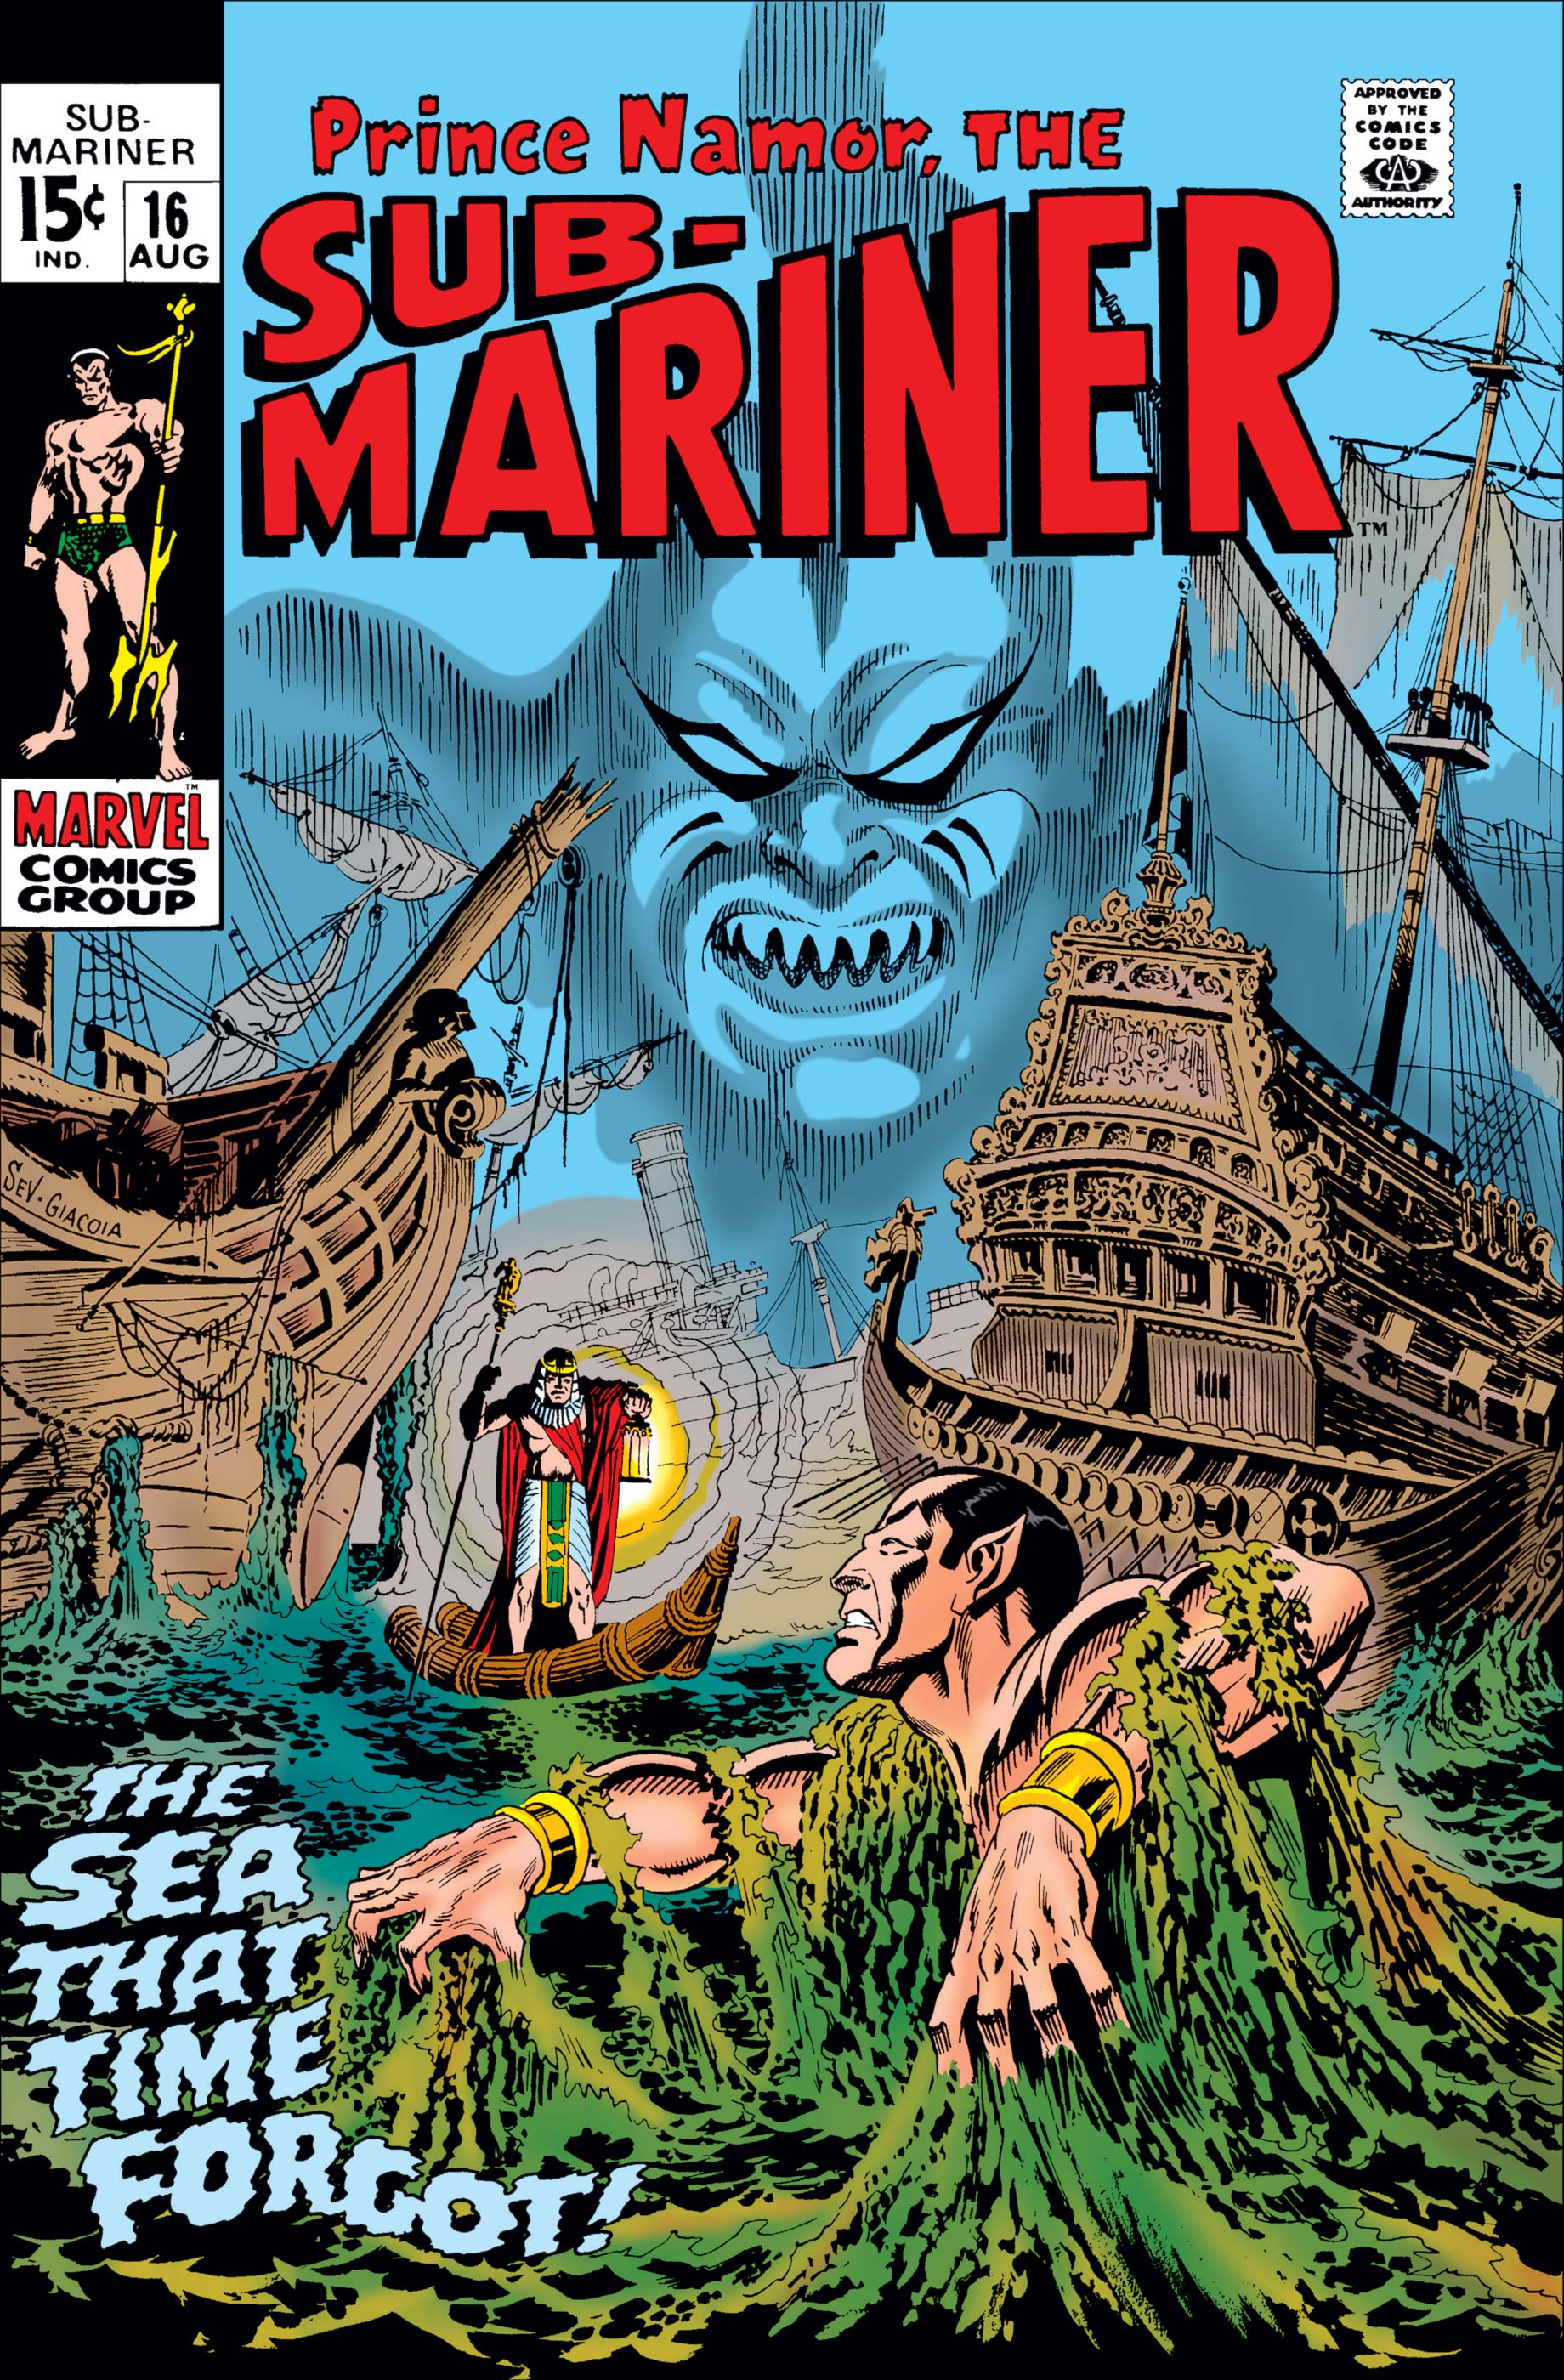 Sub-Mariner (1968) #16